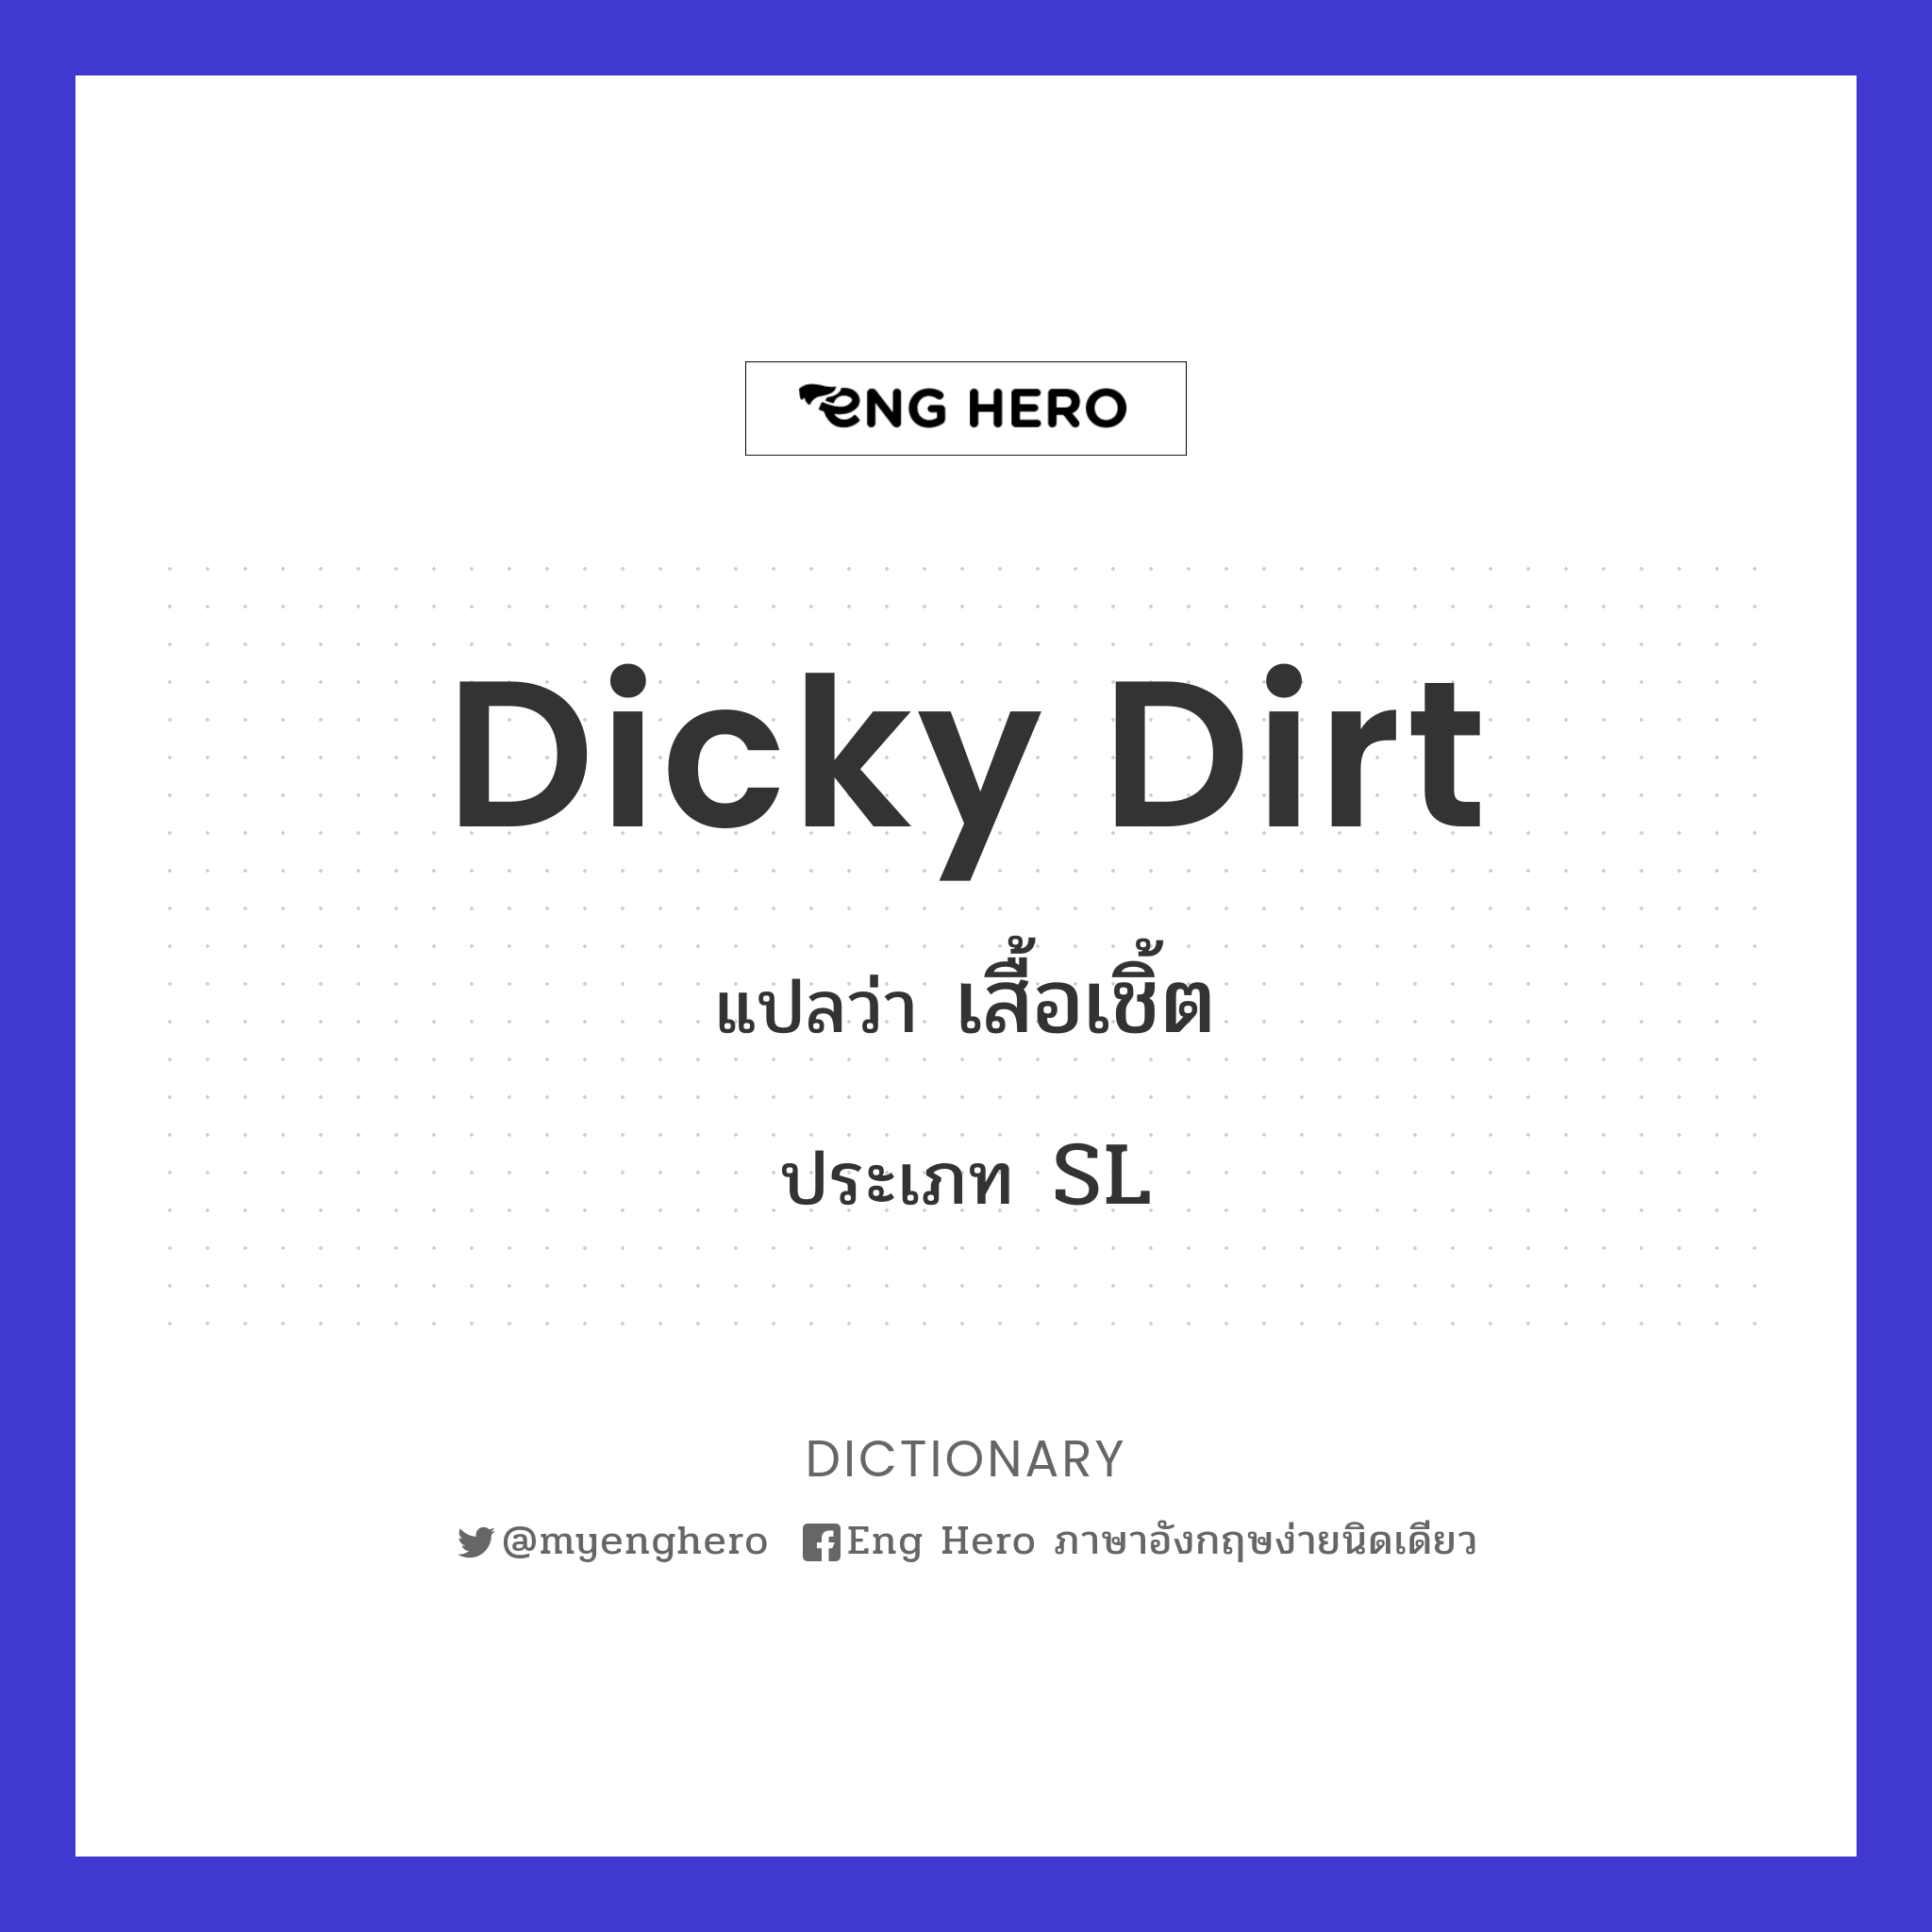 Dicky Dirt